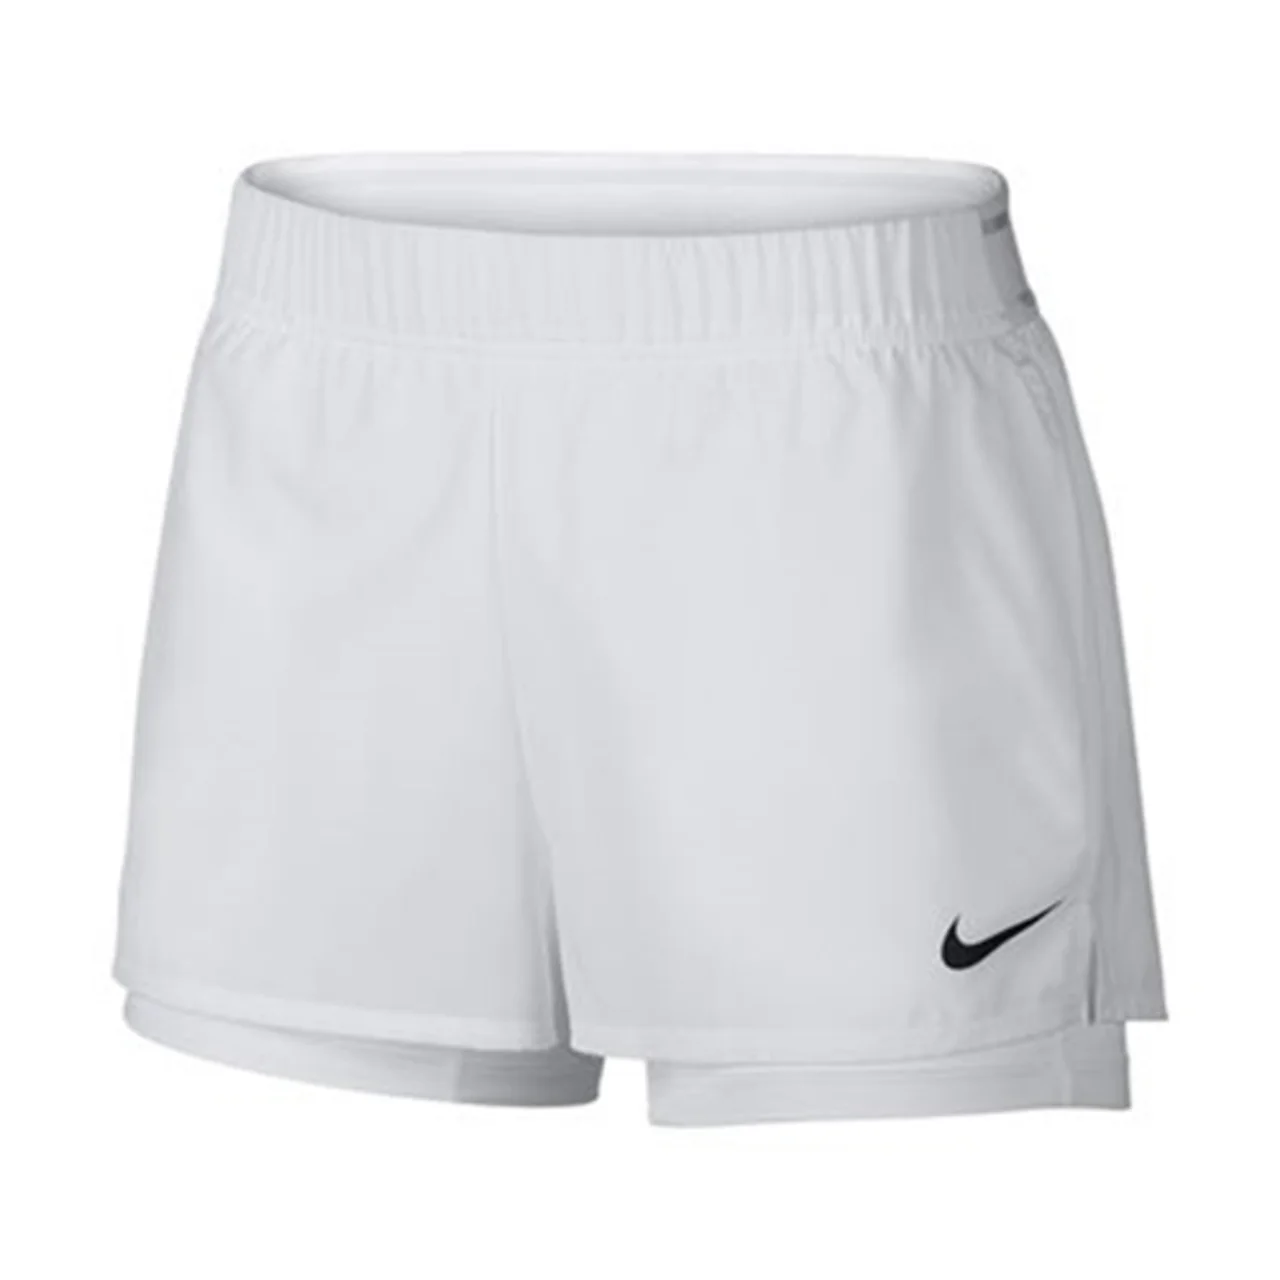 Nike Court Flex Ace Shorts Women White (With pockets)